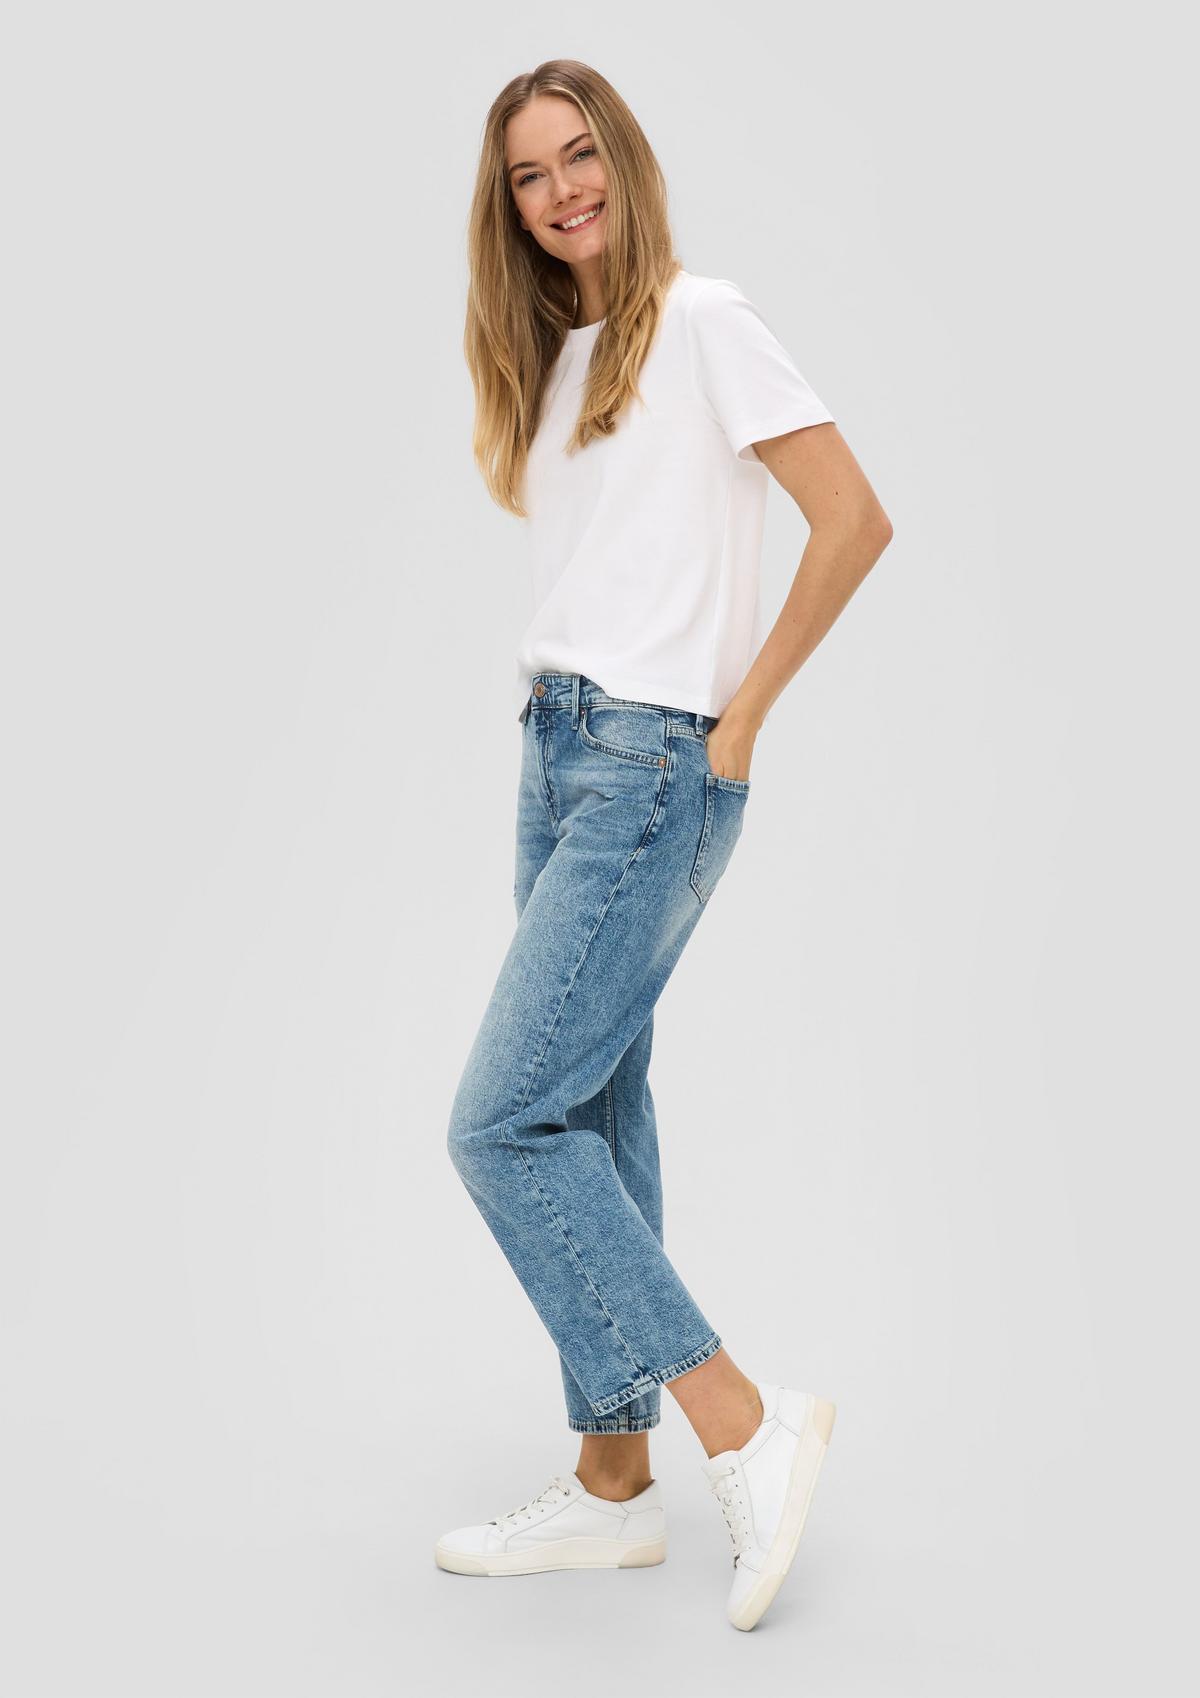 s.Oliver Karolin jeans / Regular Fit / Mid Rise / Straight Leg